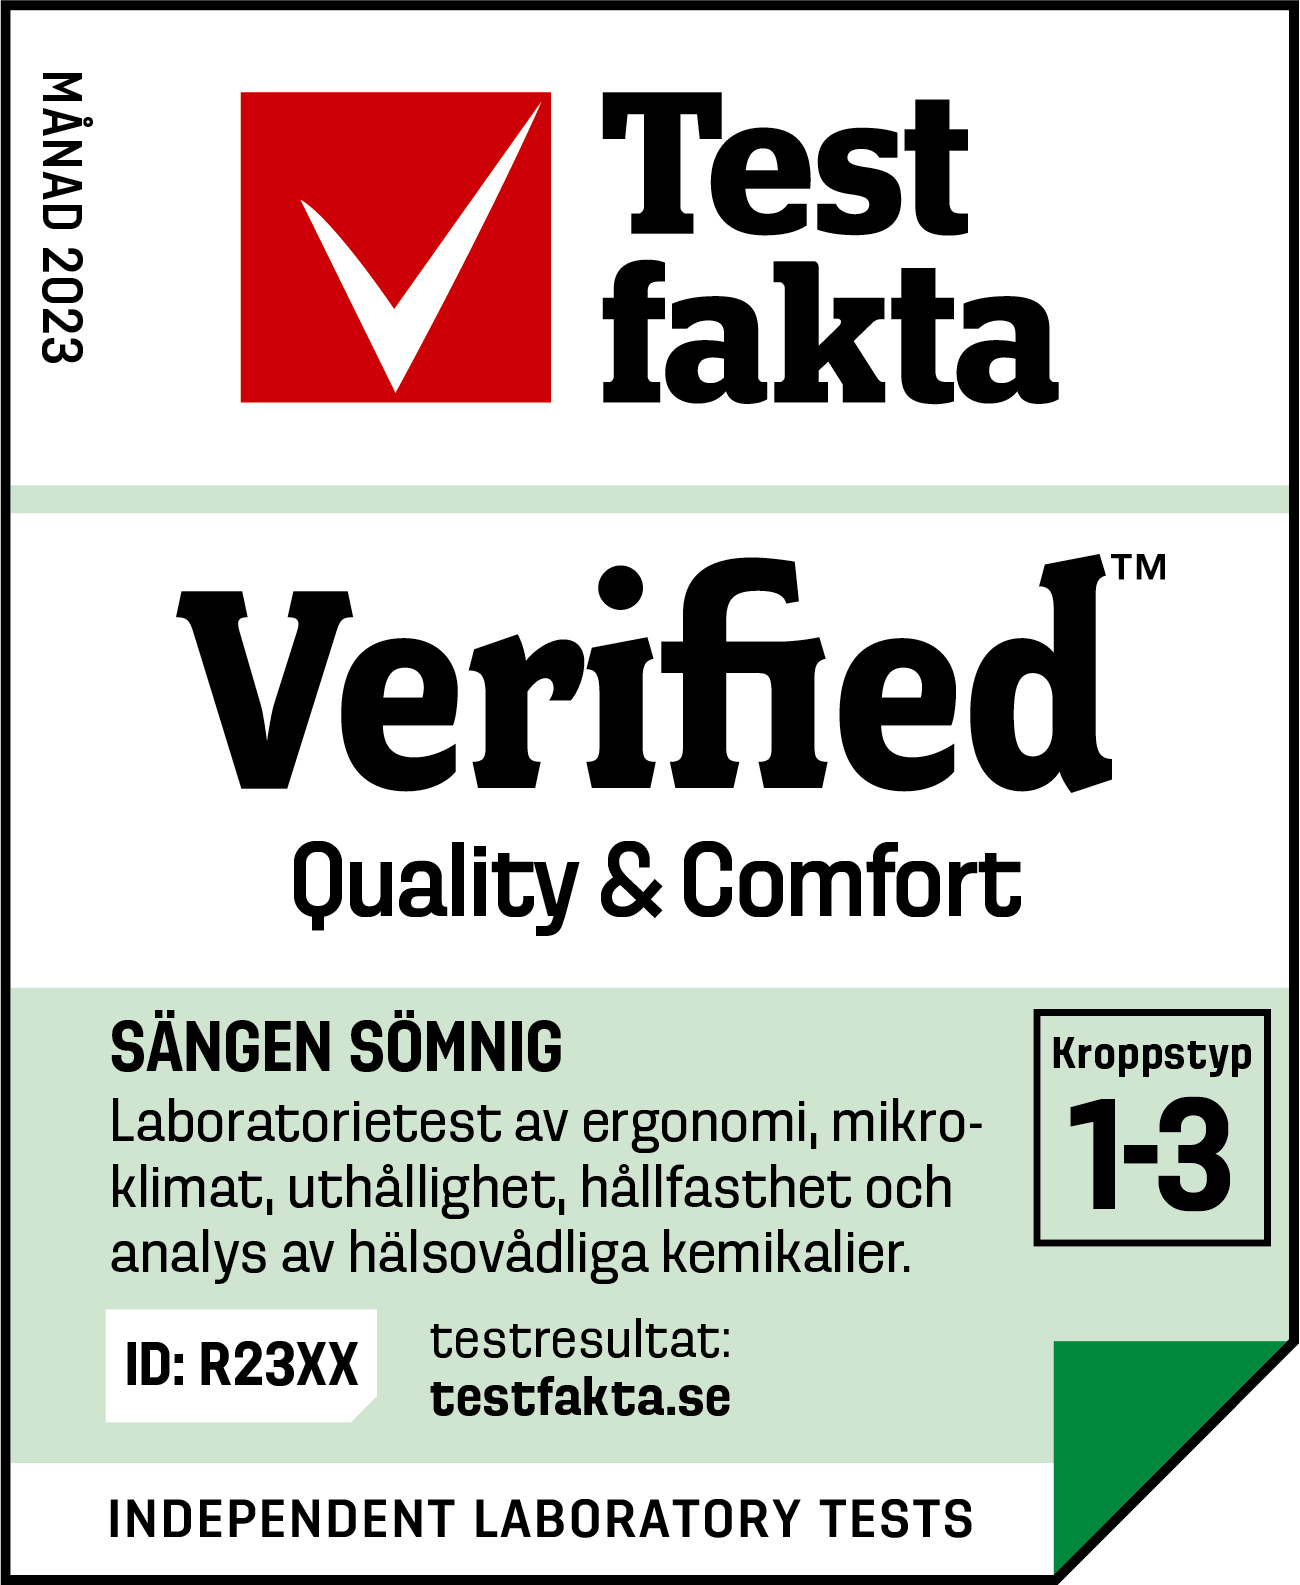 Verified Quality & Comfort